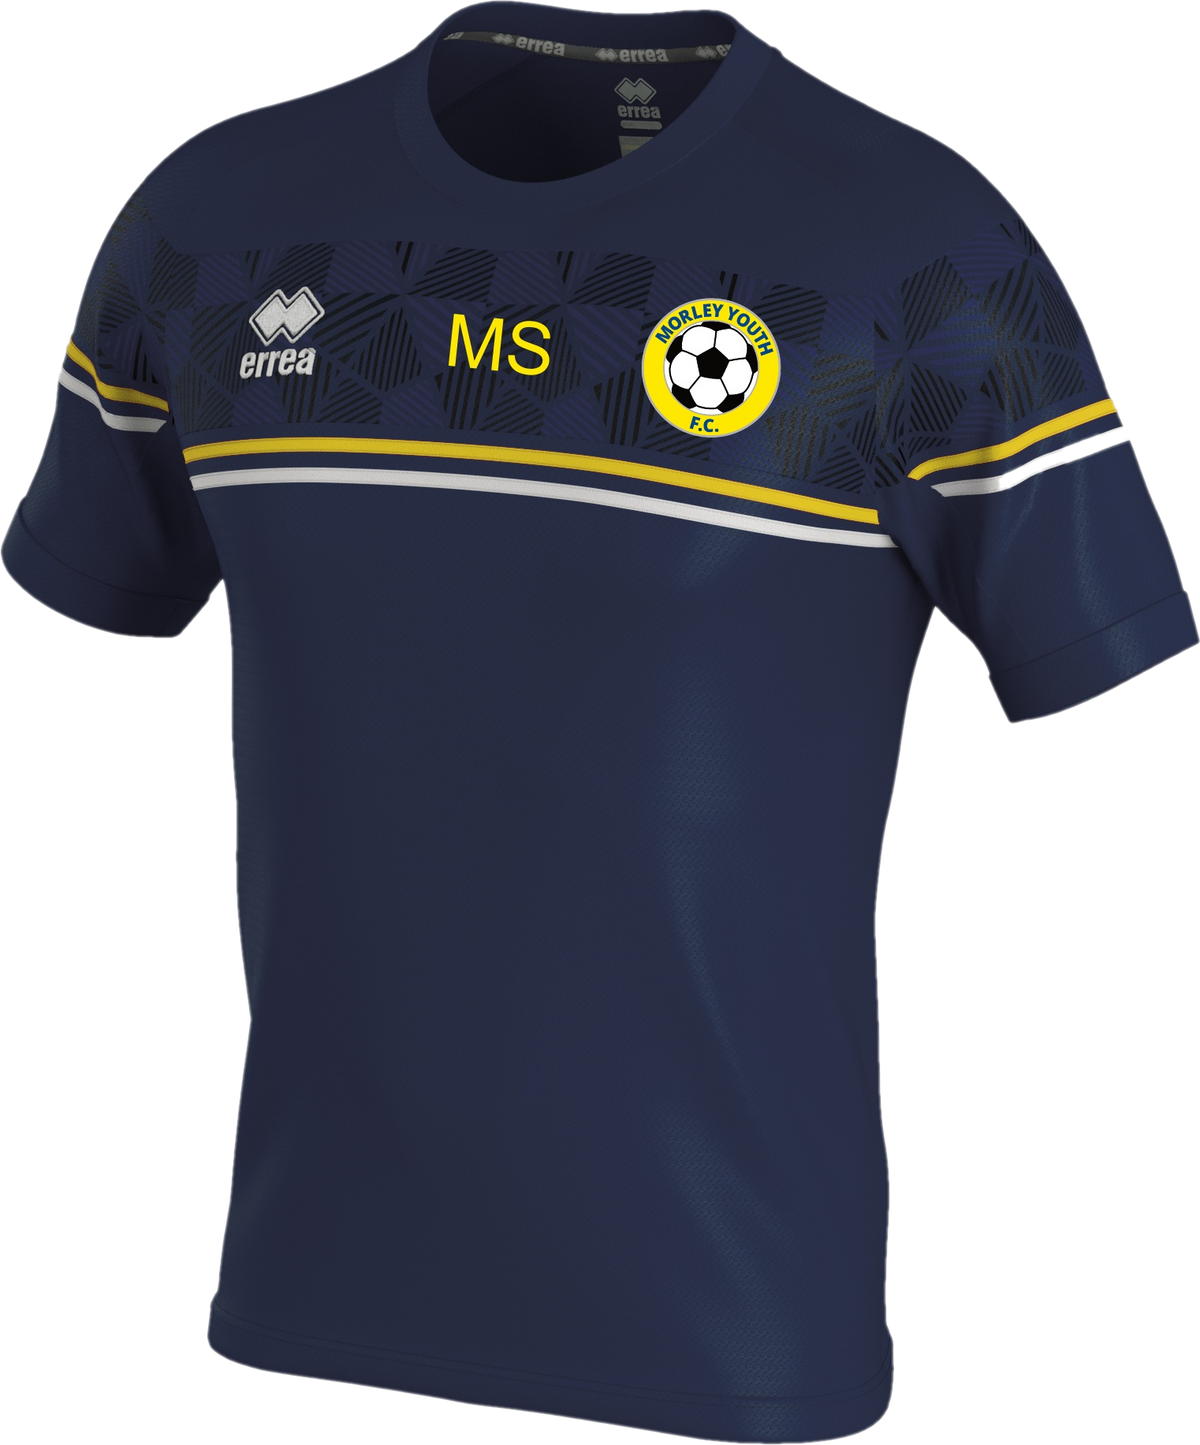 Morley Youth FC Errea Diamantis Shirt in Adult